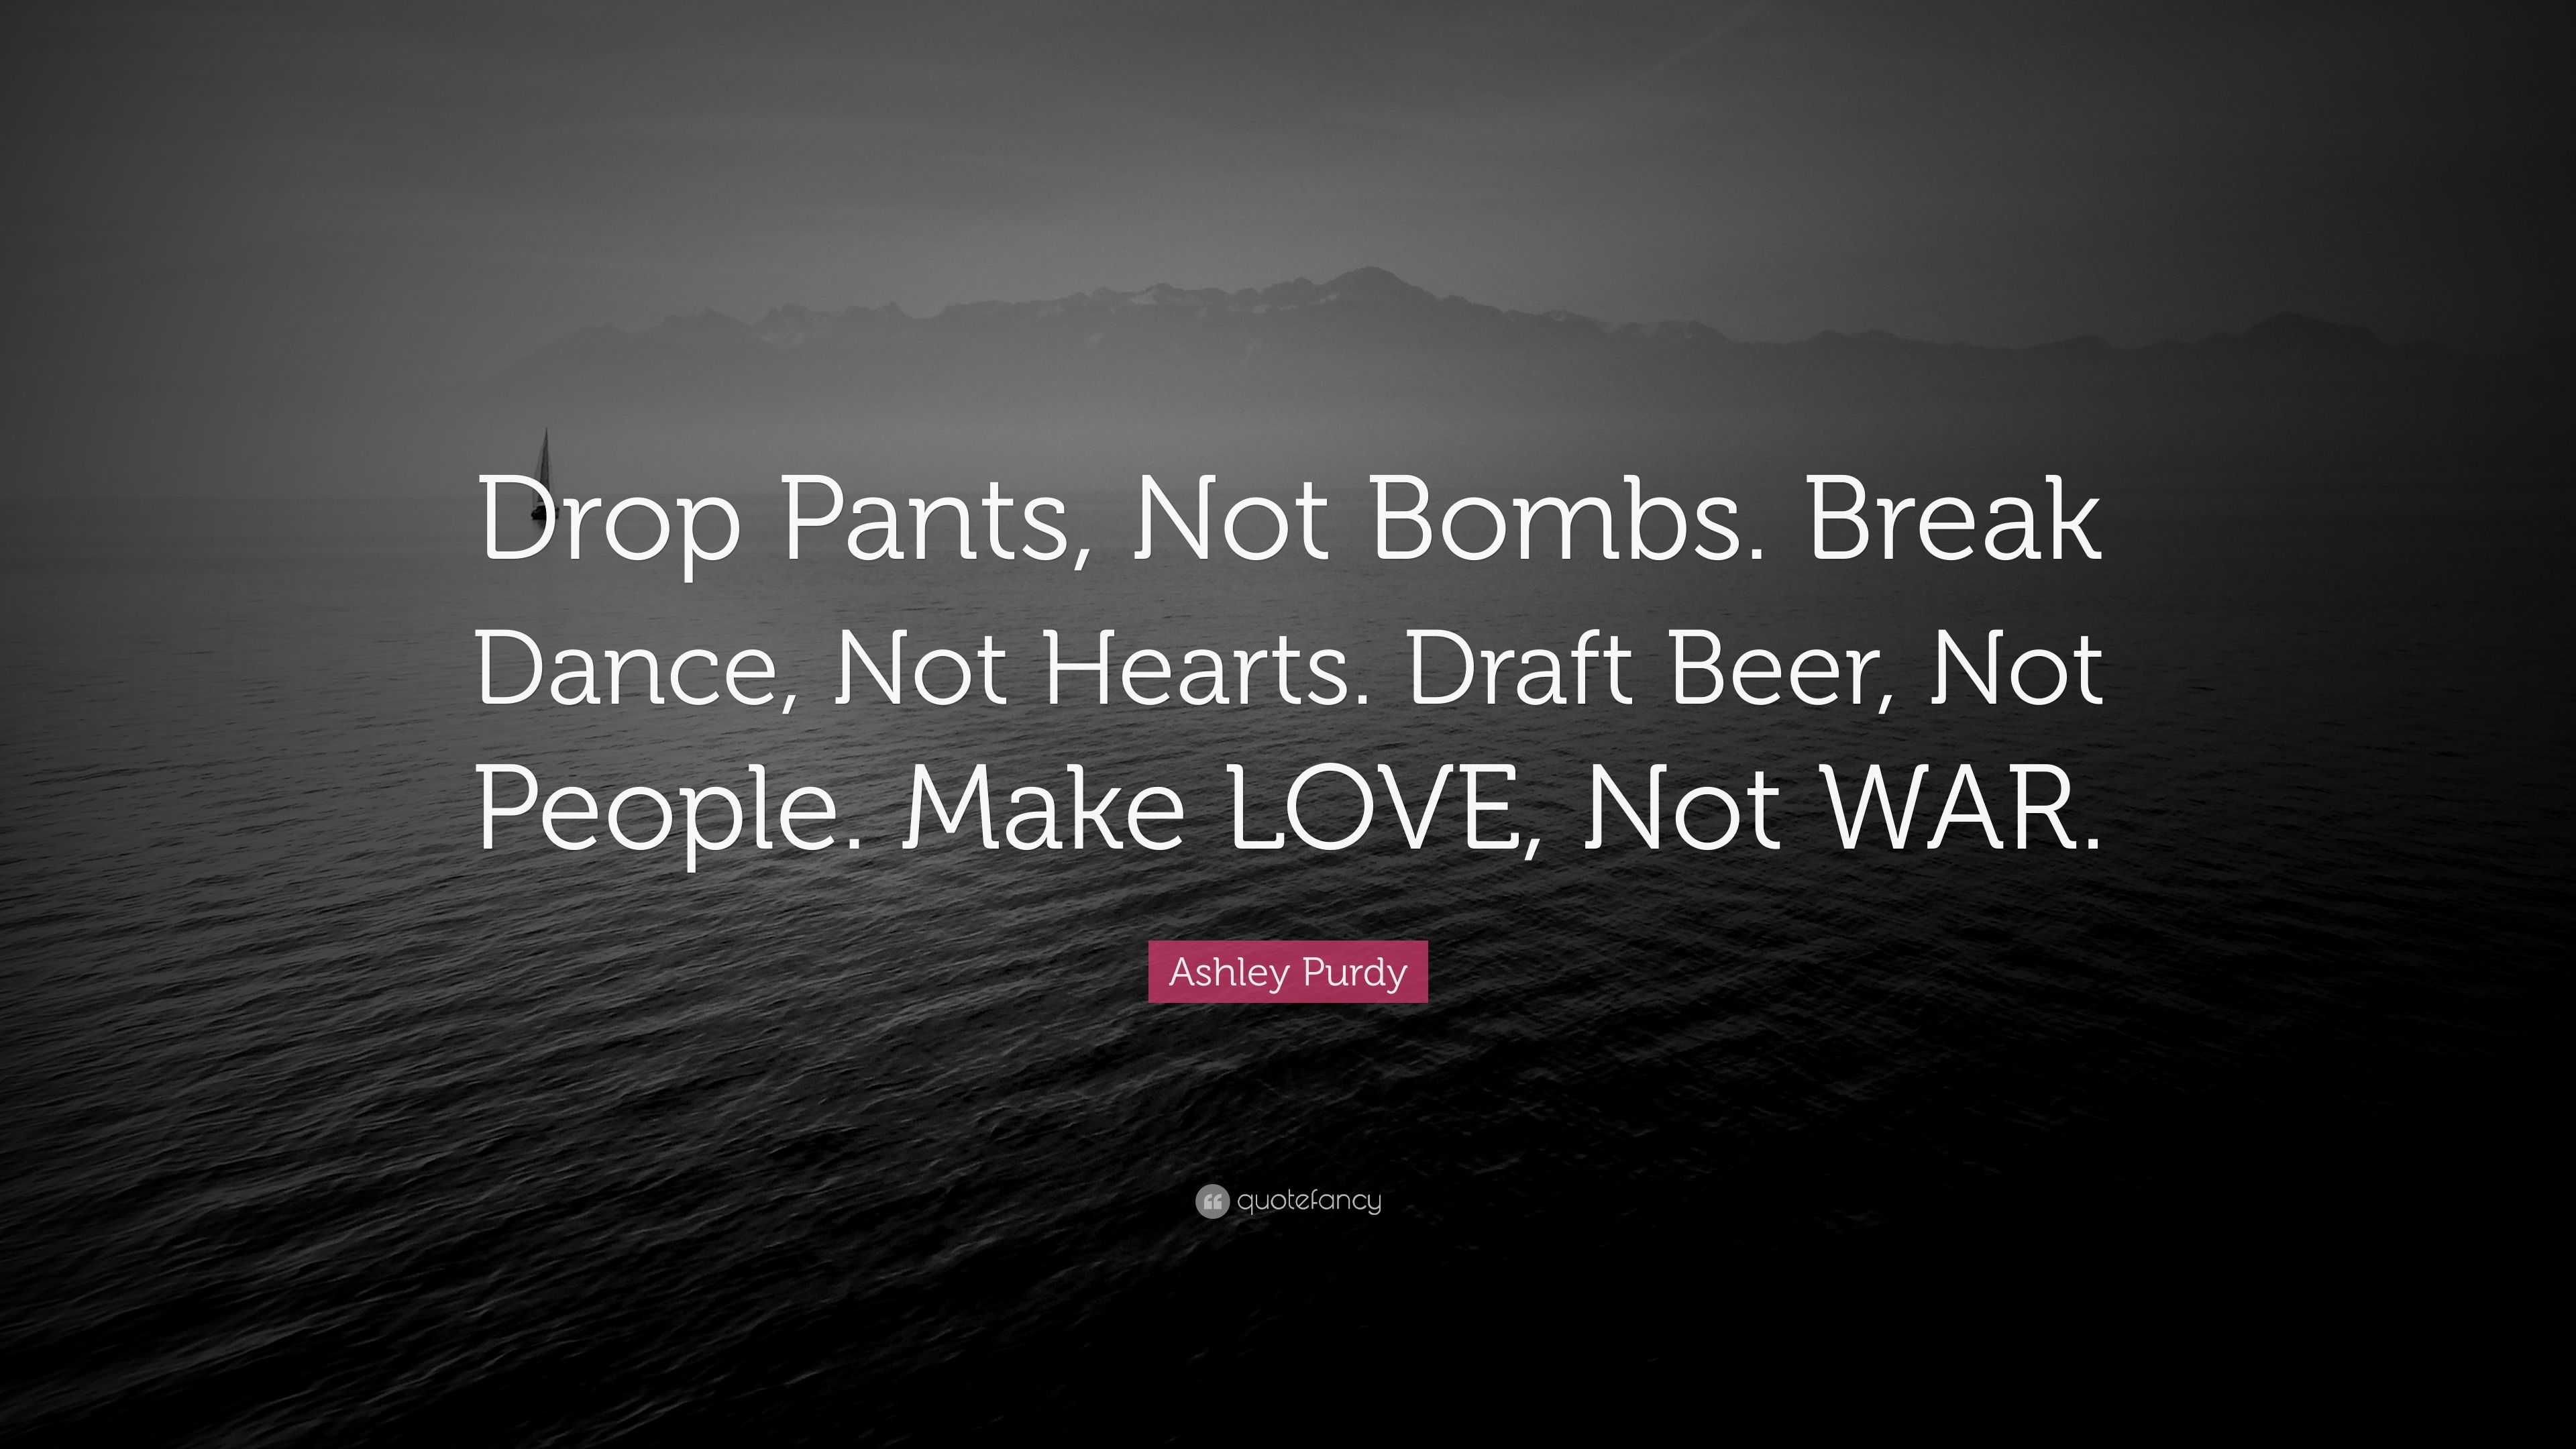 Ashley Purdy Quote “Drop Pants Not Bombs Break Dance Not Hearts